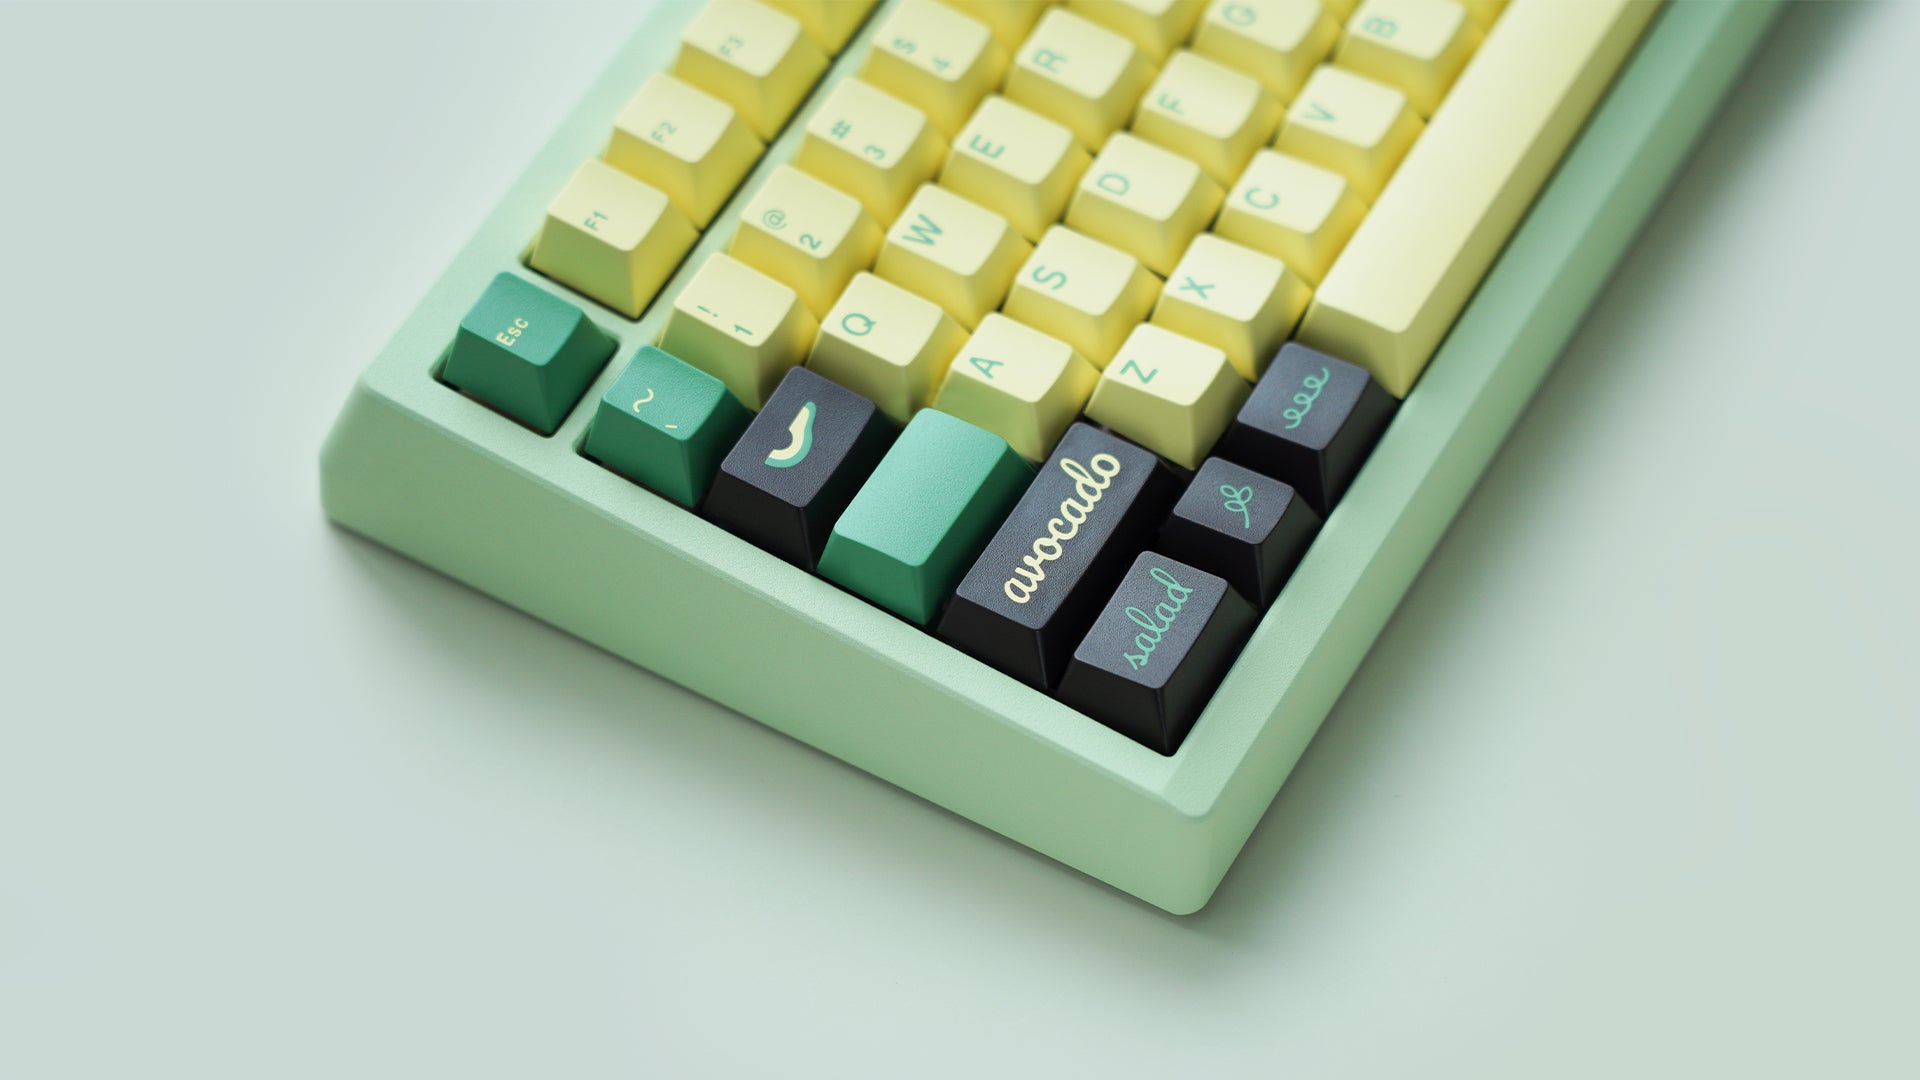 [Group-Buy] Meletrix Zoom75 Essential Edition (EE) - Barebones Keyboard Kit - Milky Green